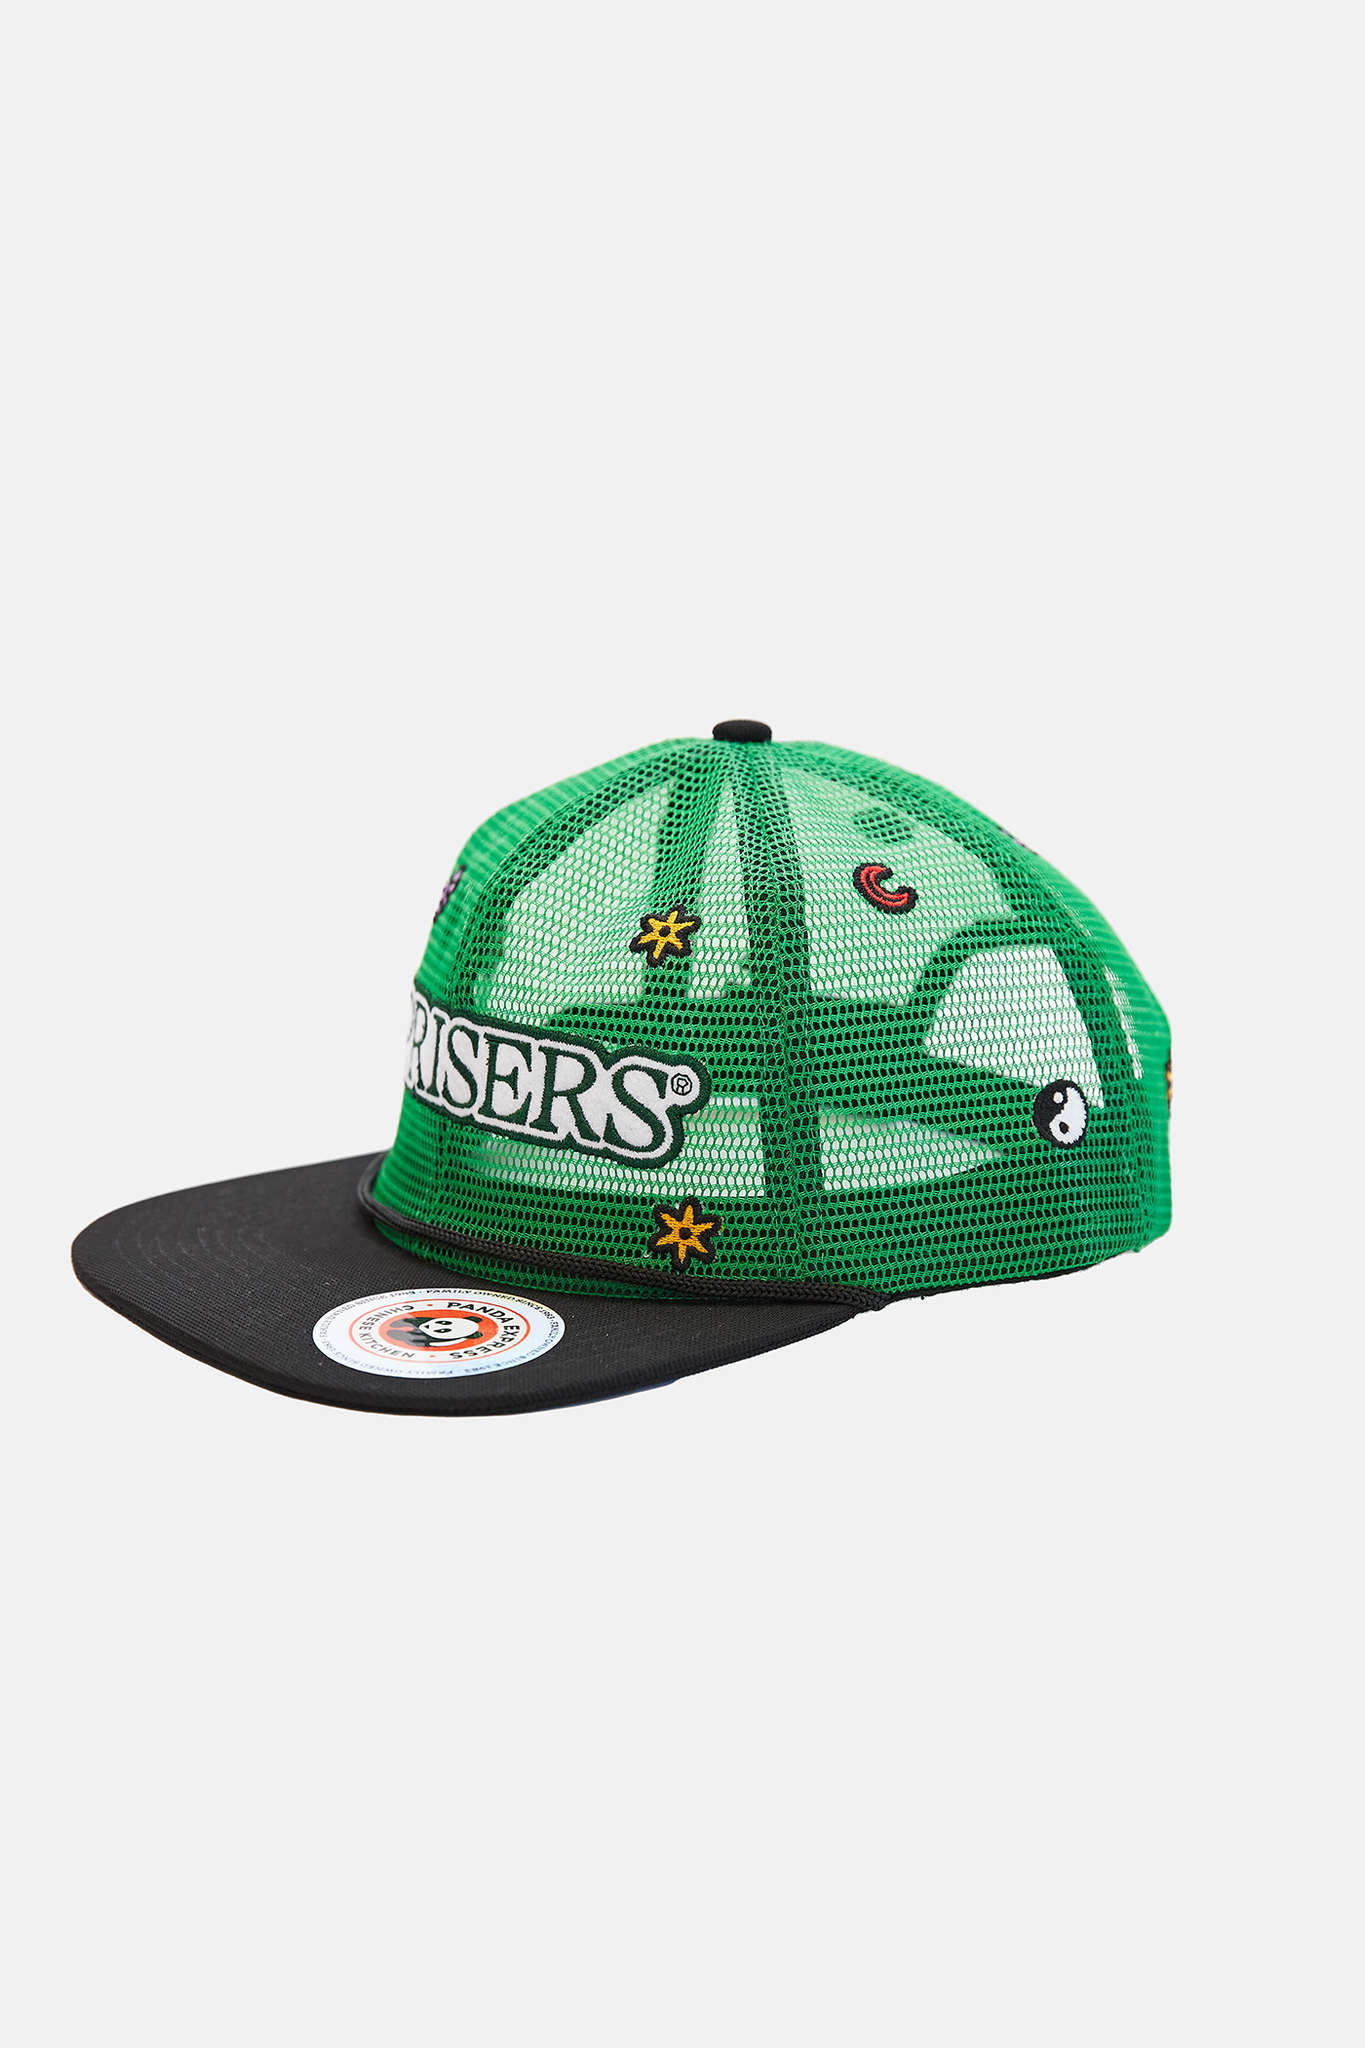 UPRISERS x Panda Express Limited Edition Embellished Trucker Hat